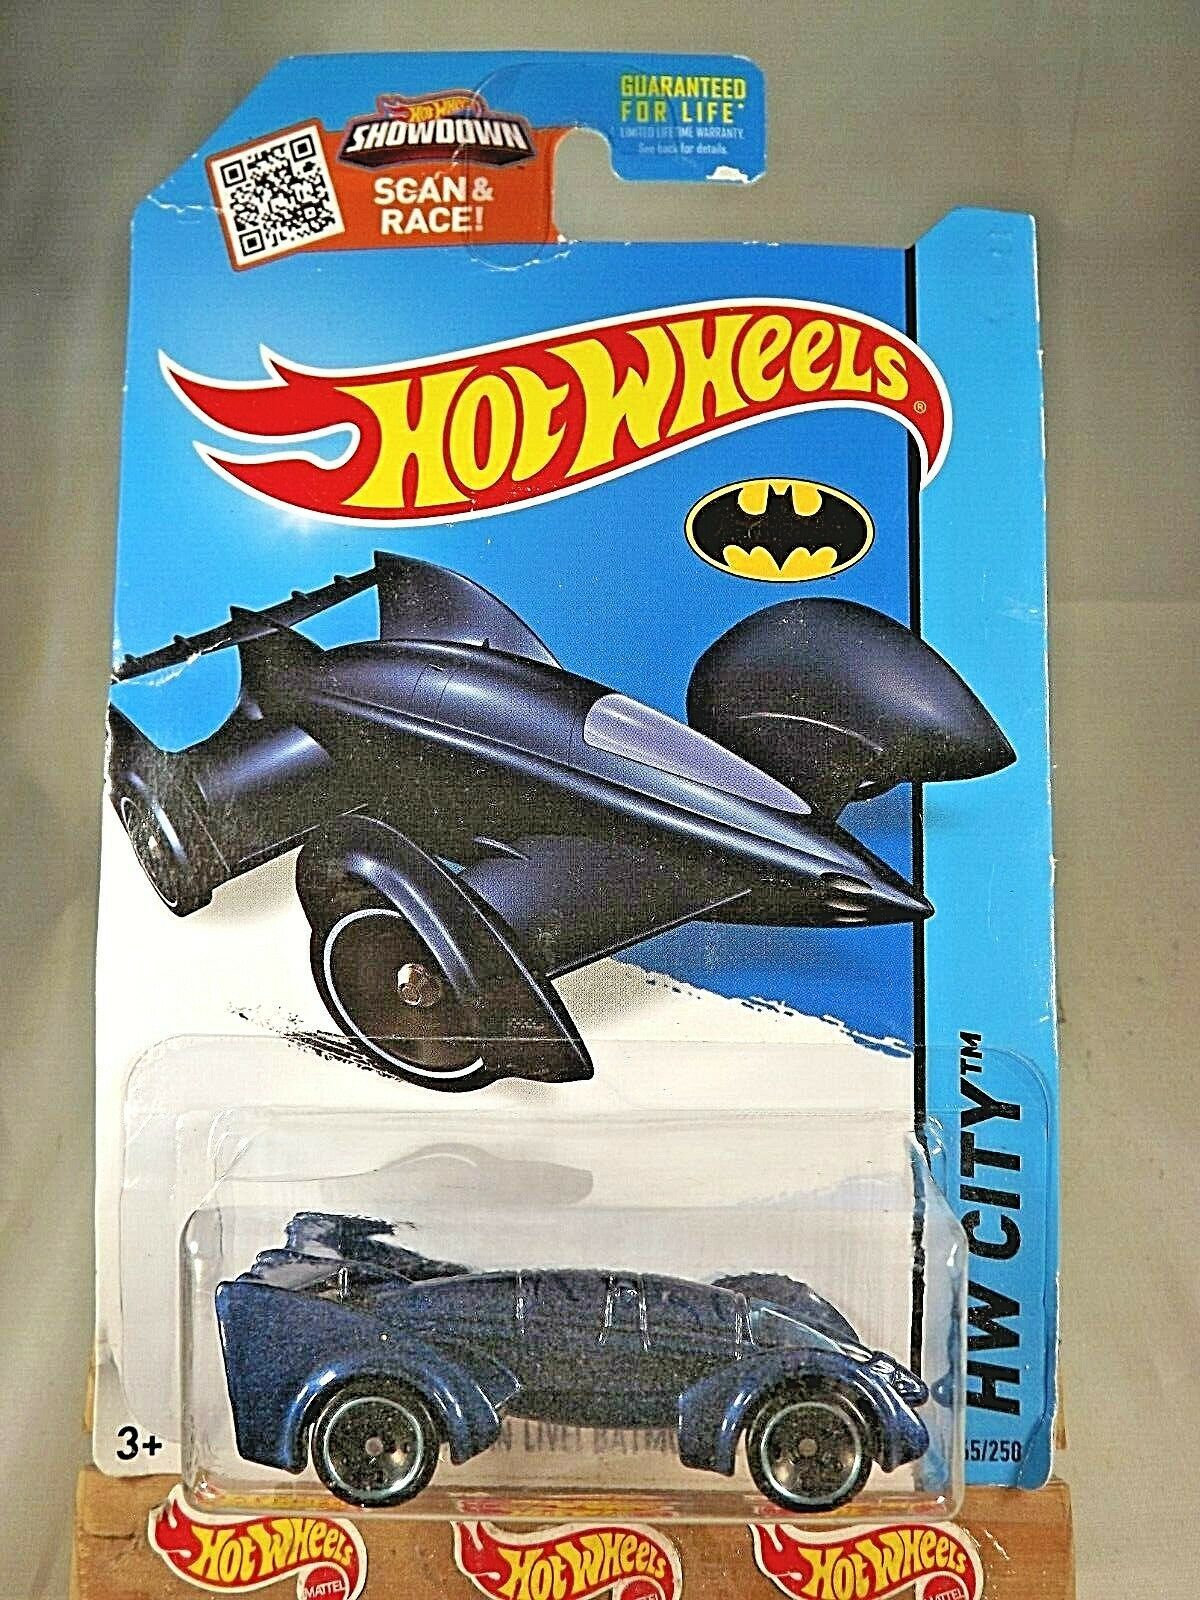 download hot wheels batman forever batmobile